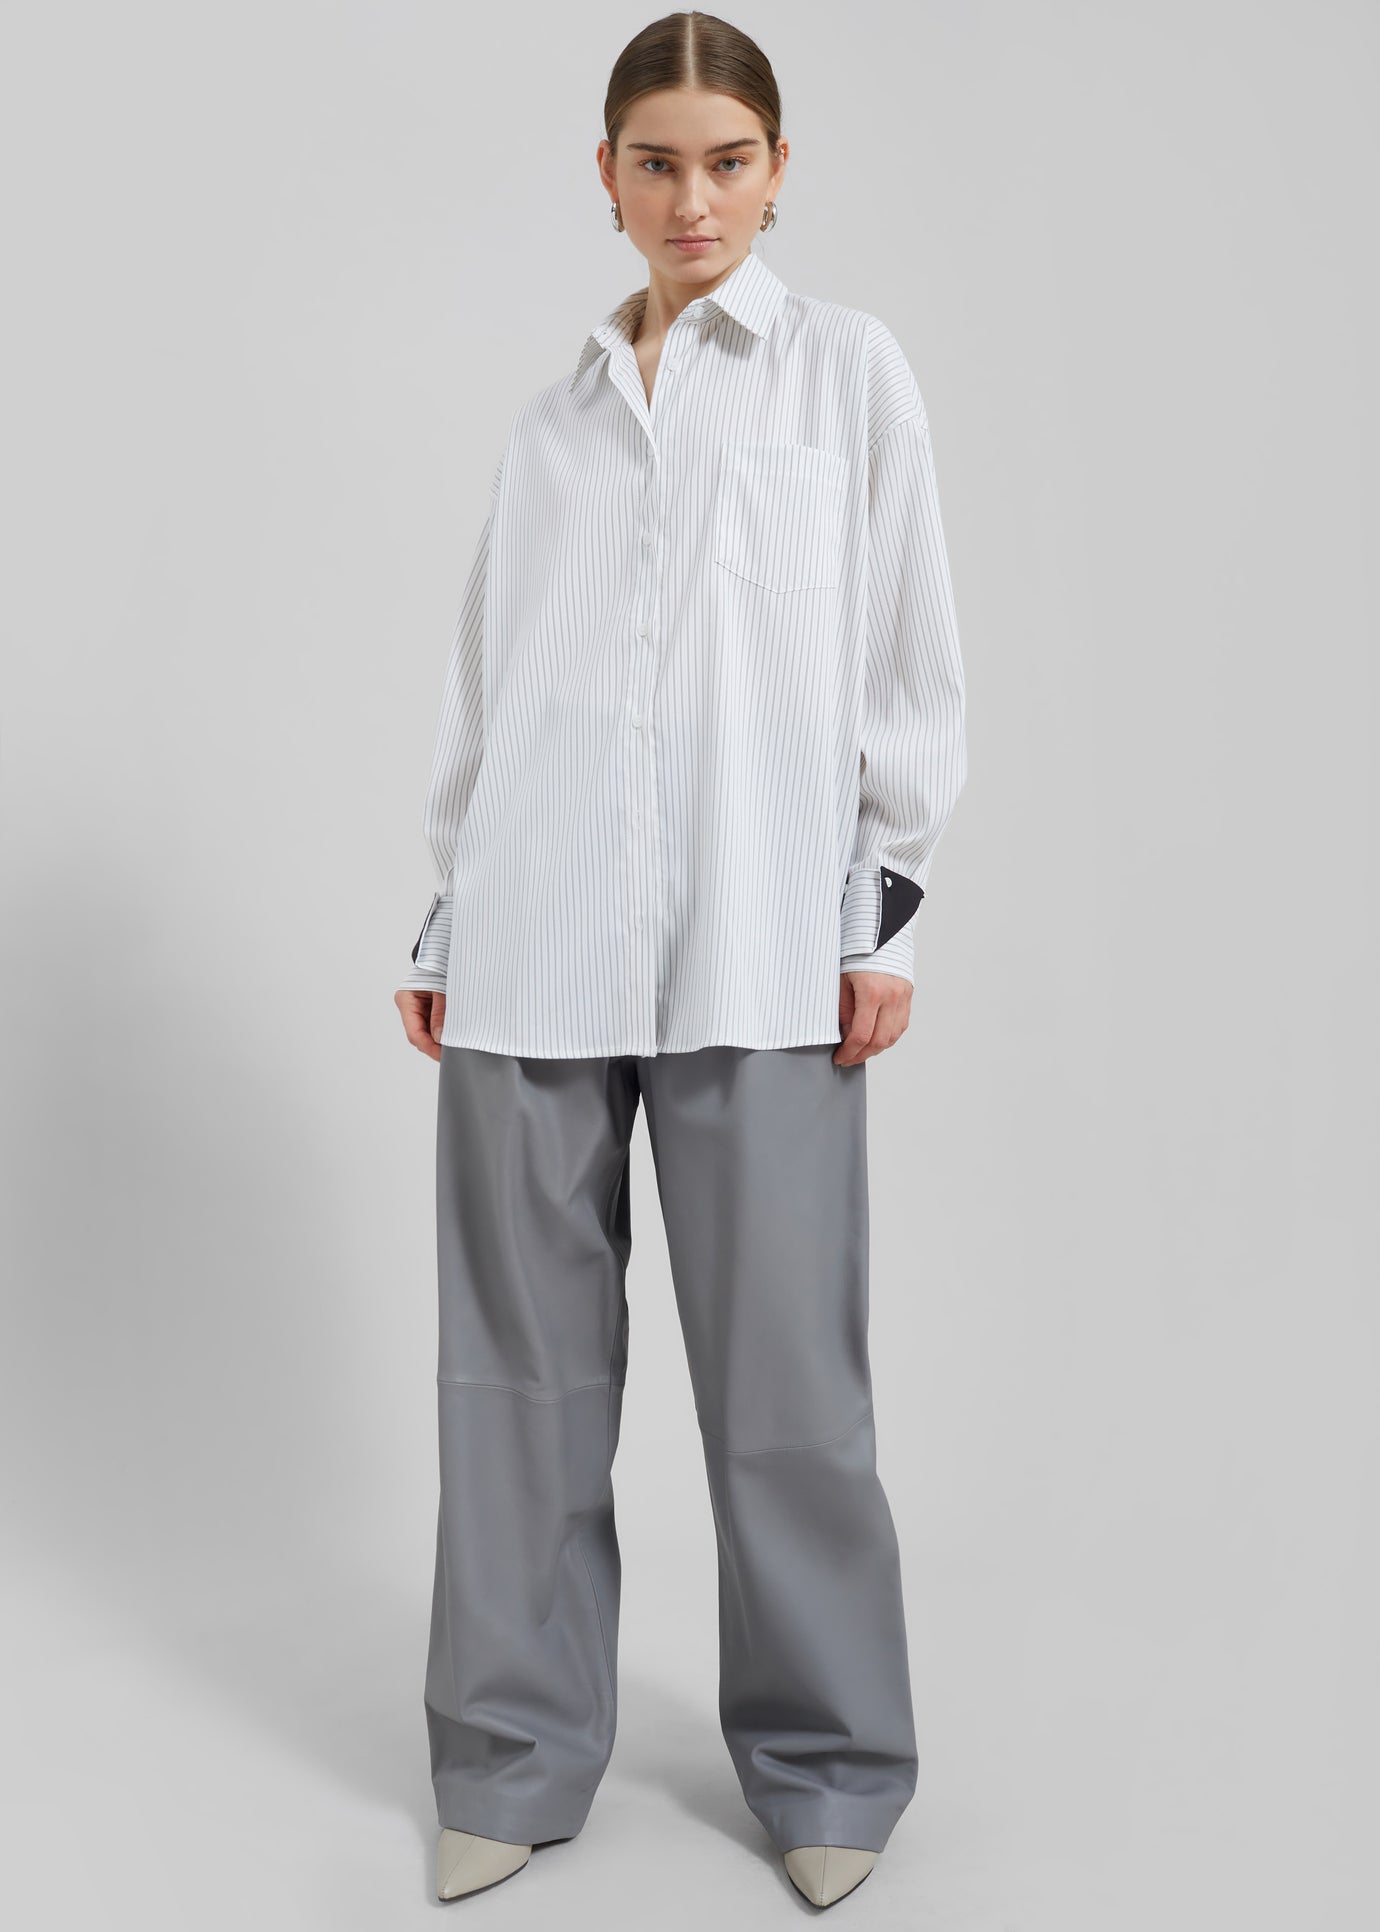 Leona Button Up Shirt - White/Grey Stripe